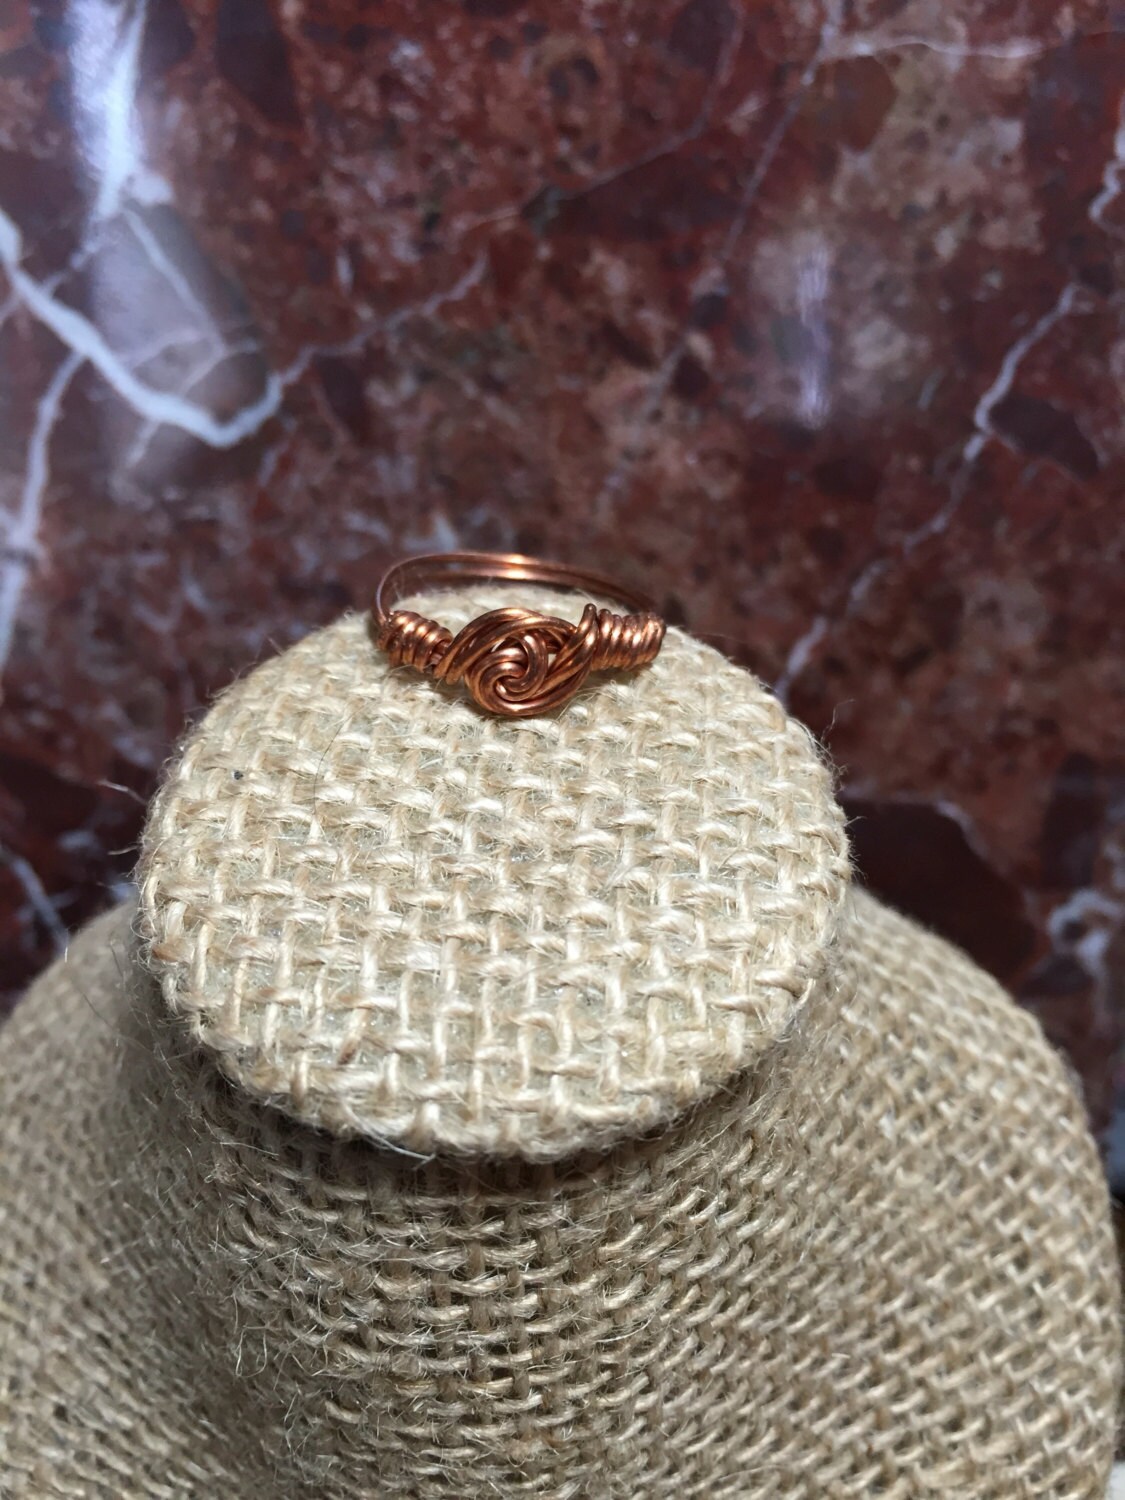 Copper rosetta ring arthritic copper ring by BellasJewelryTree